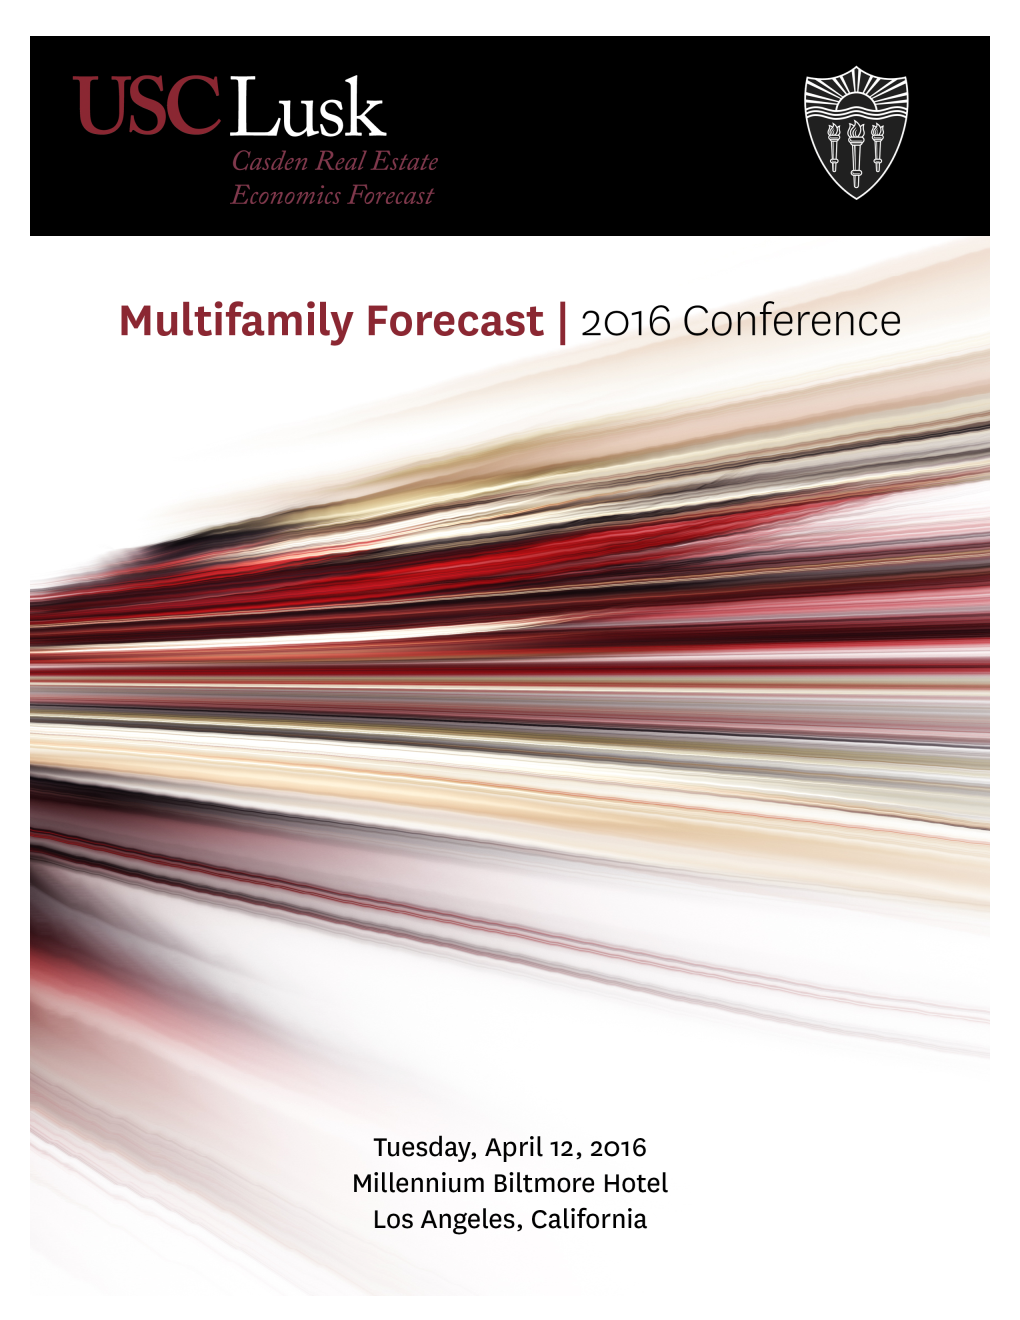 2016: "Multifamily Housing in Gateway Cities"